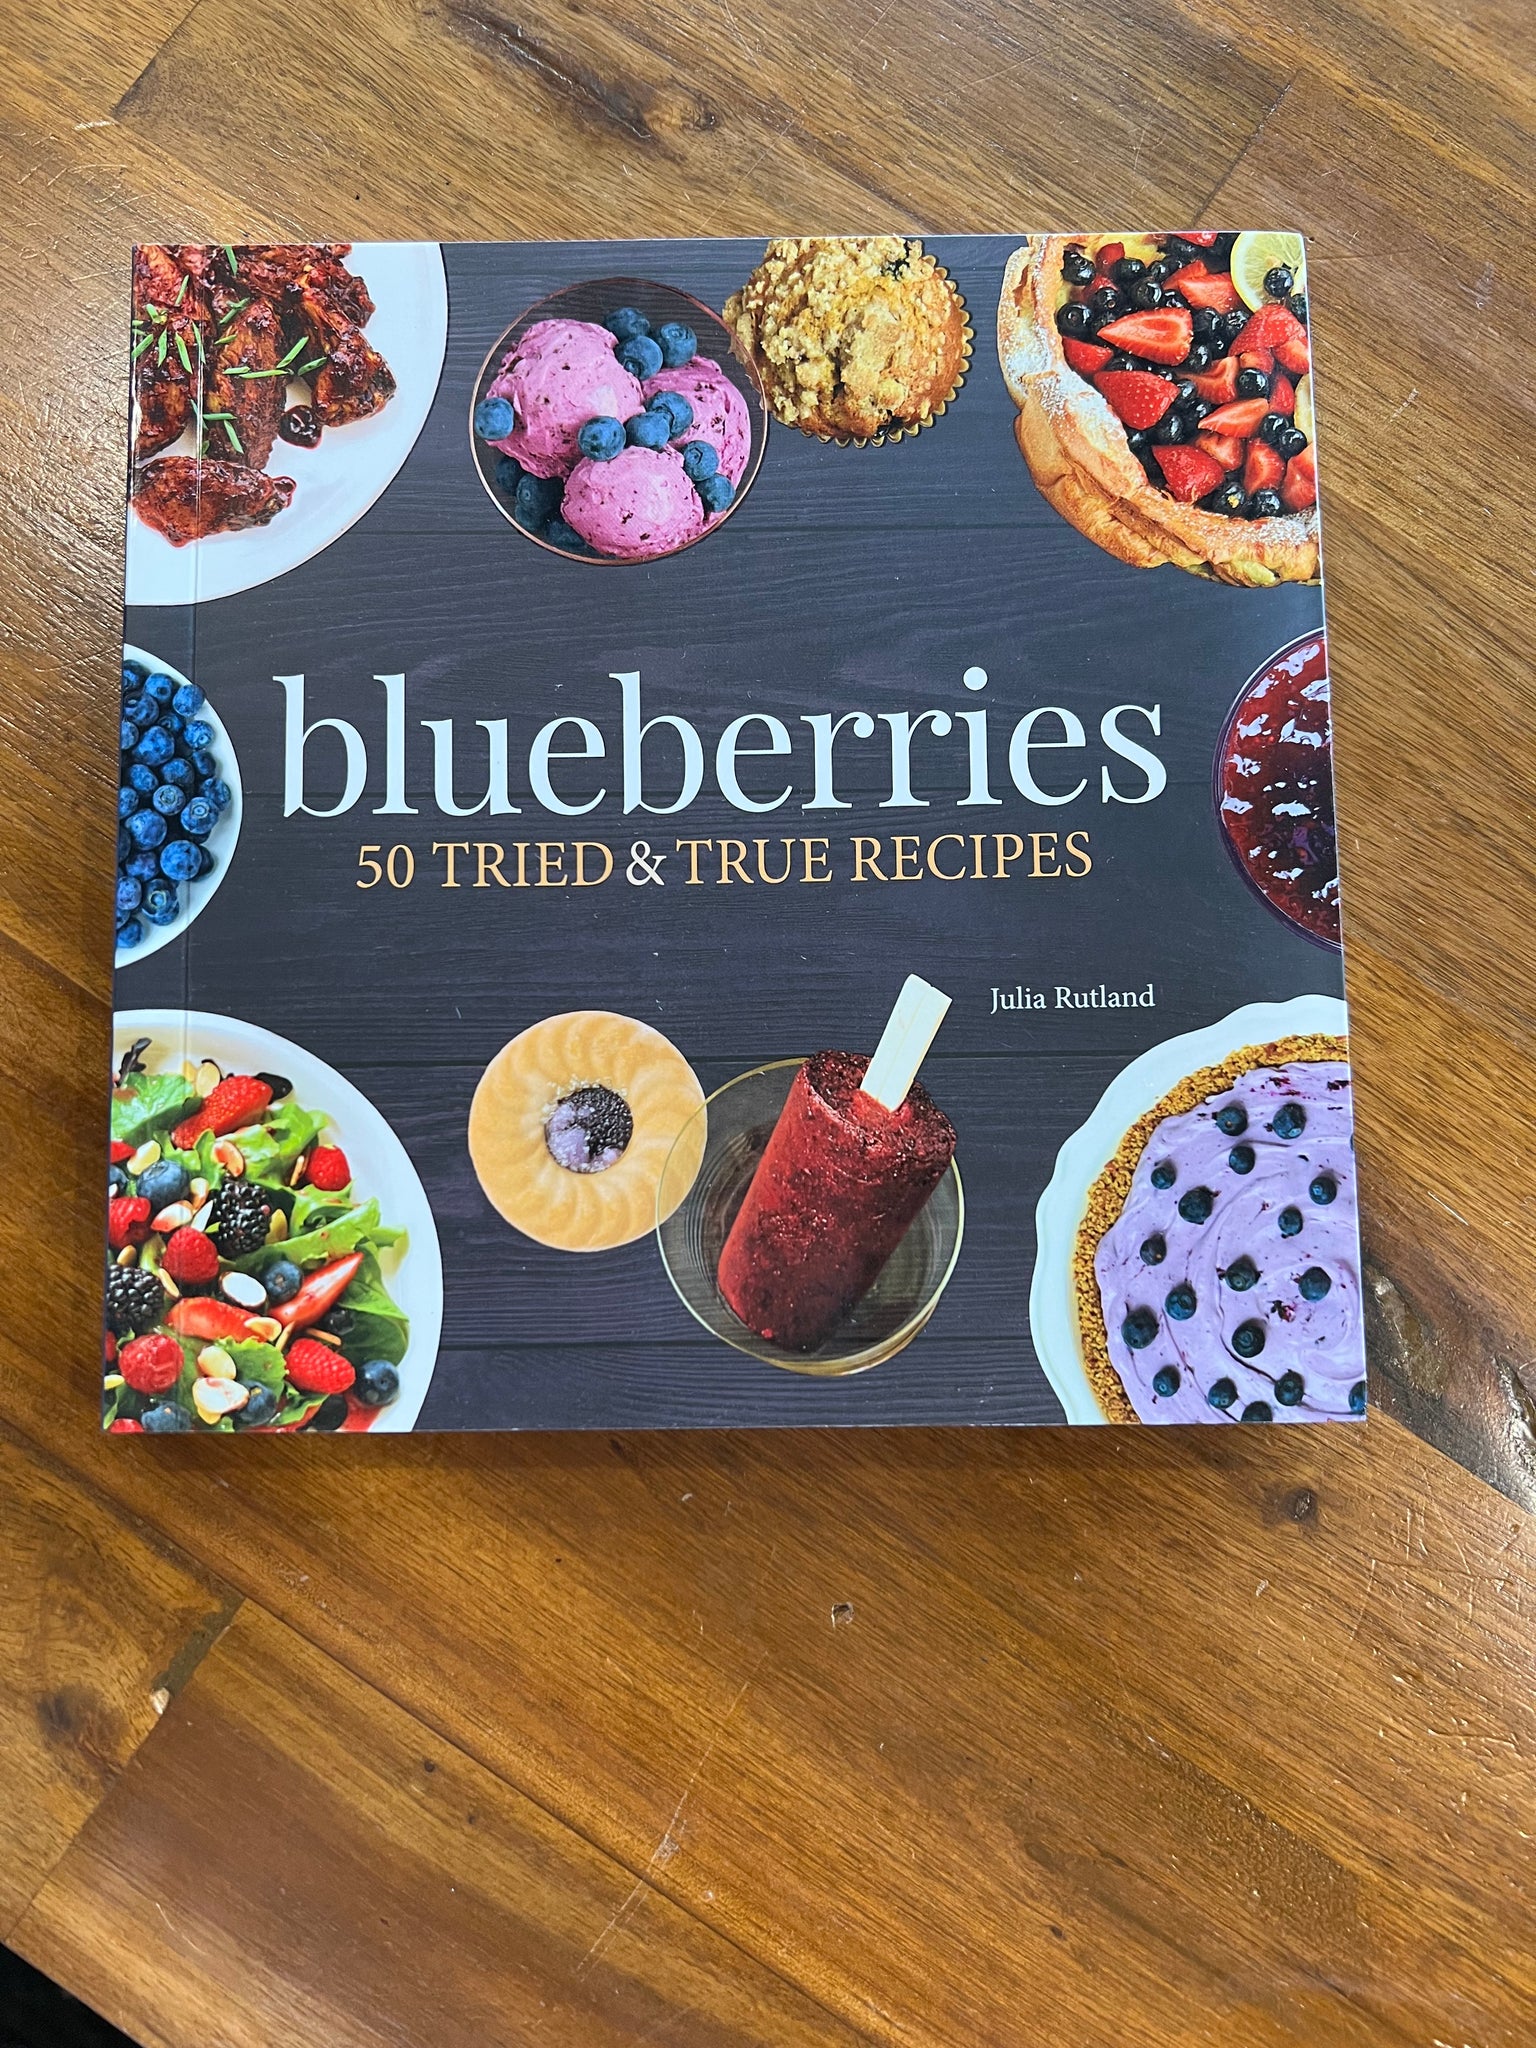 Blueberries Cookbook